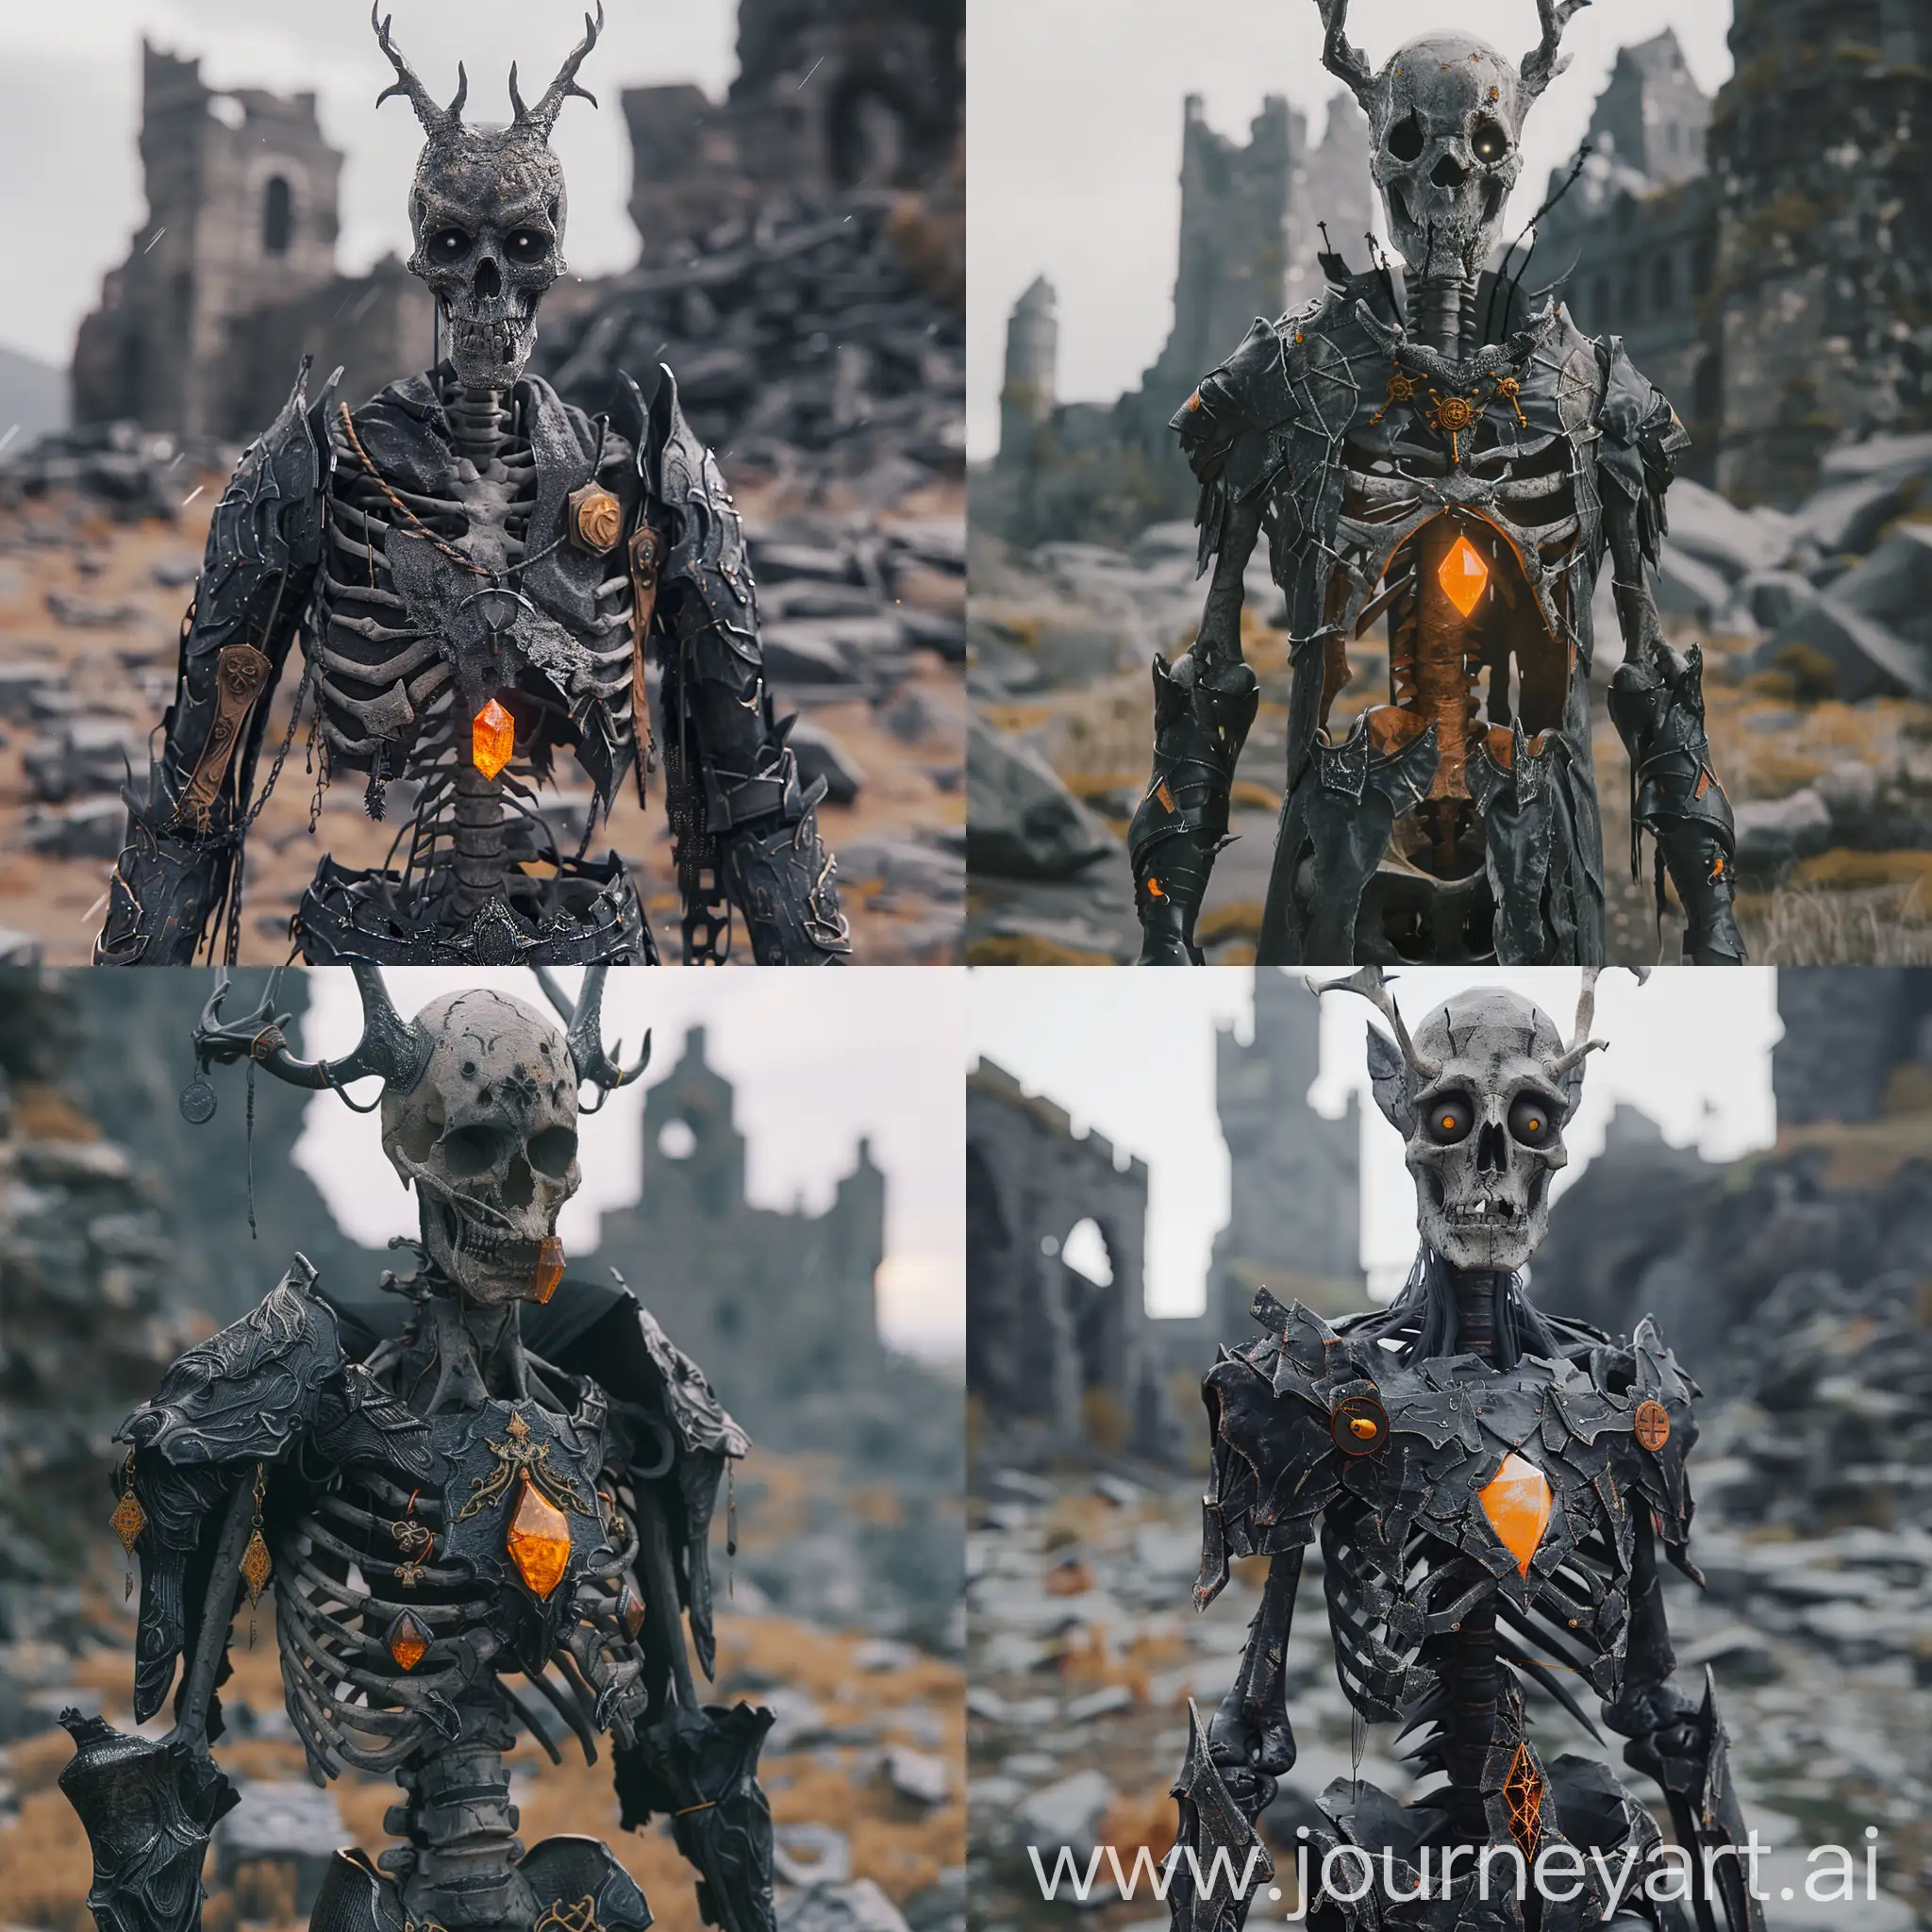 Desolate-Fantasy-Humanoid-Skeleton-with-Deer-Skull-in-Ruined-Castle